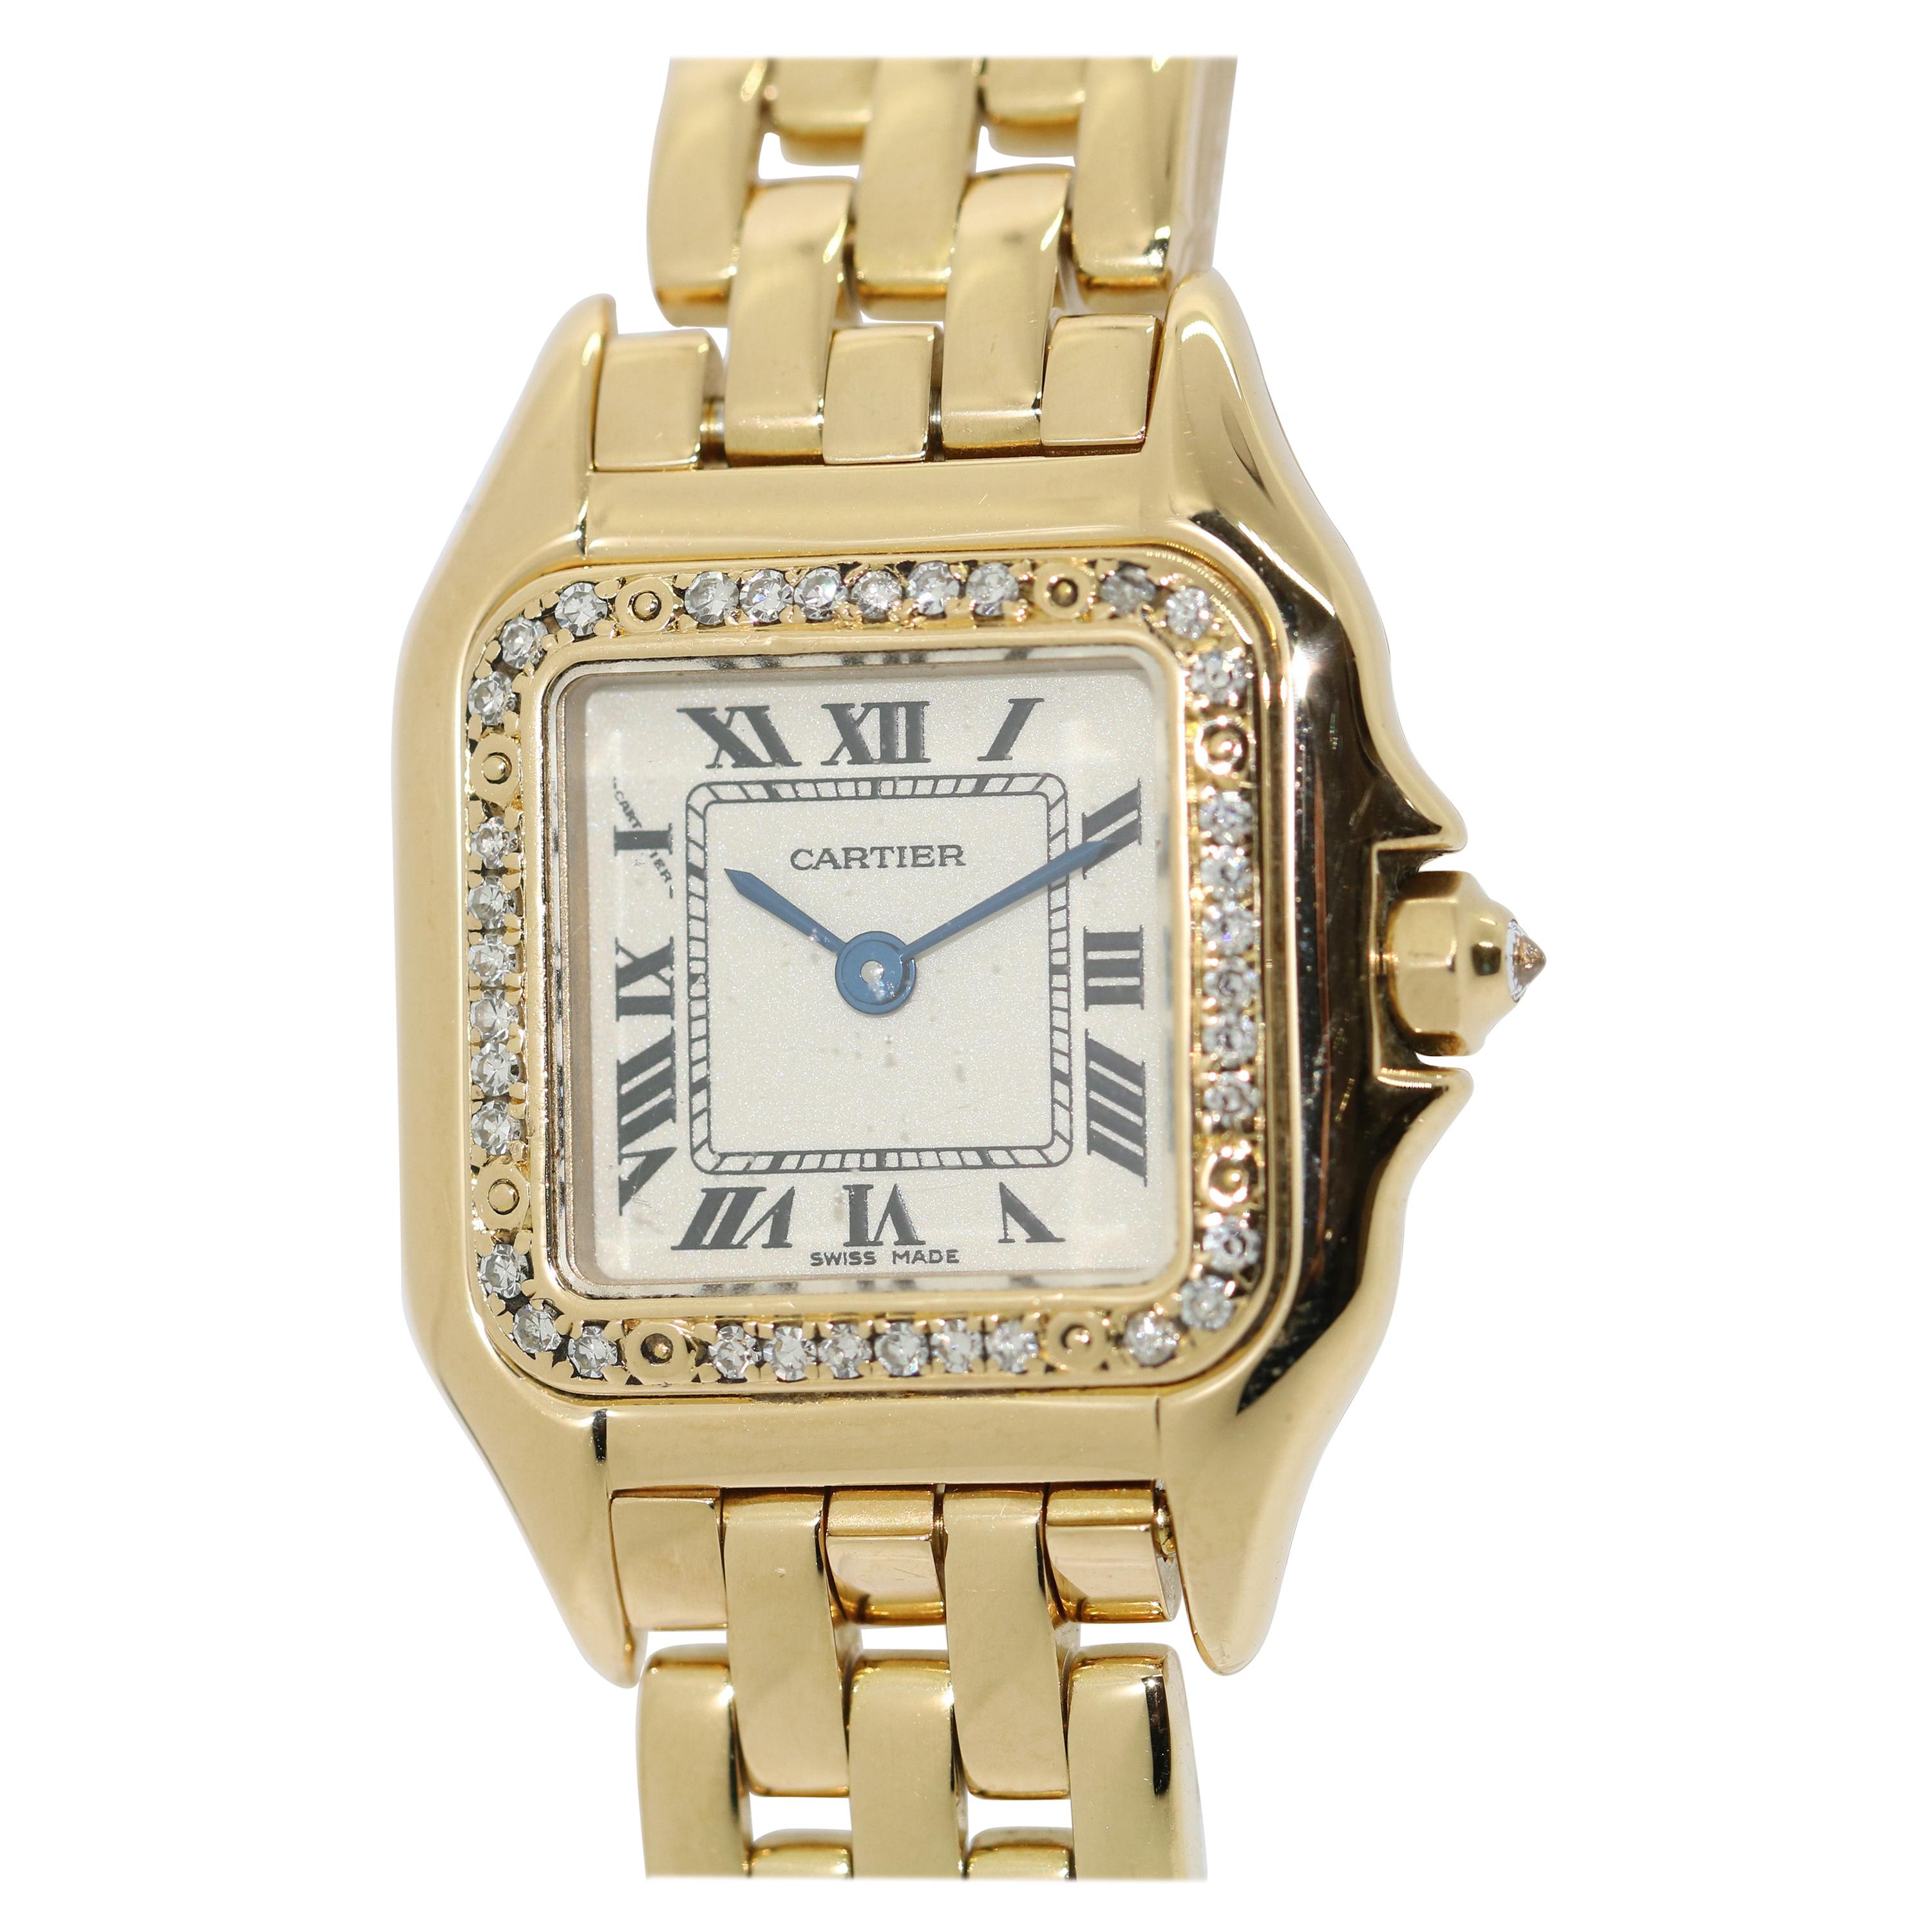 Cartier Panthère 18 Karat Gold Ladies Wrist Watch with Diamonds